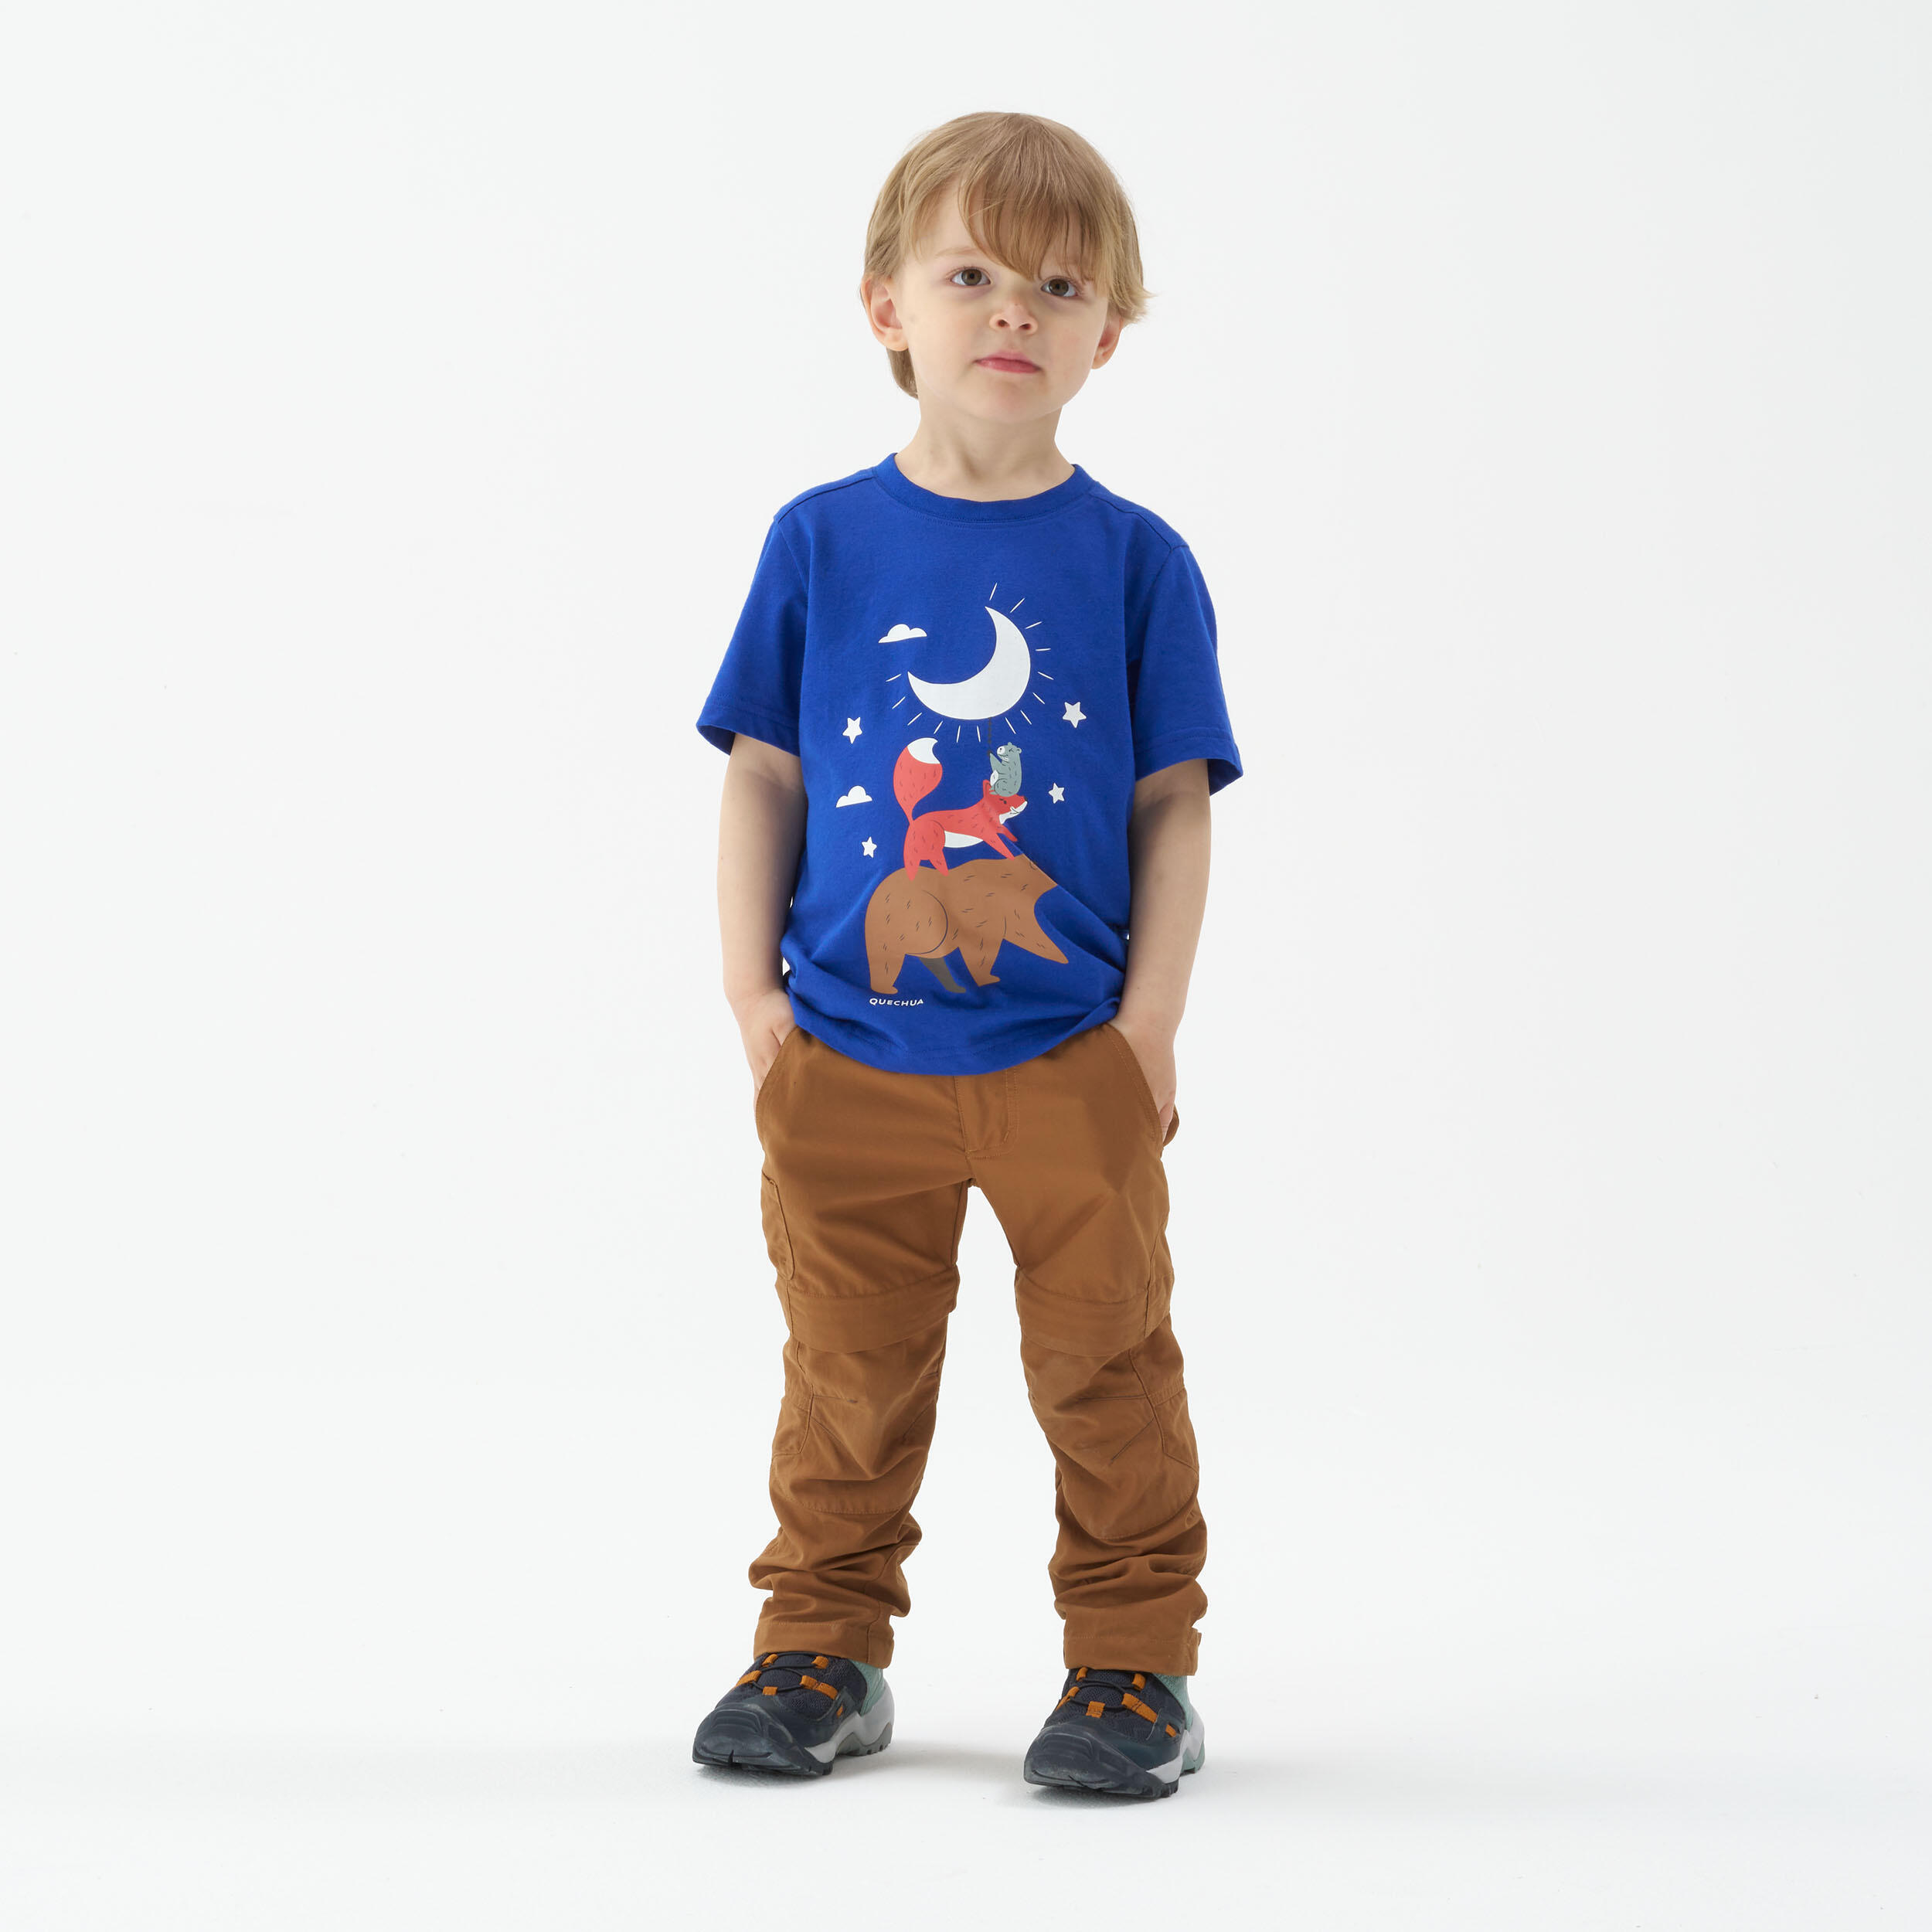 Child's hiking T-shirt - MH100 blue phosphor - 2-6 years 2/4